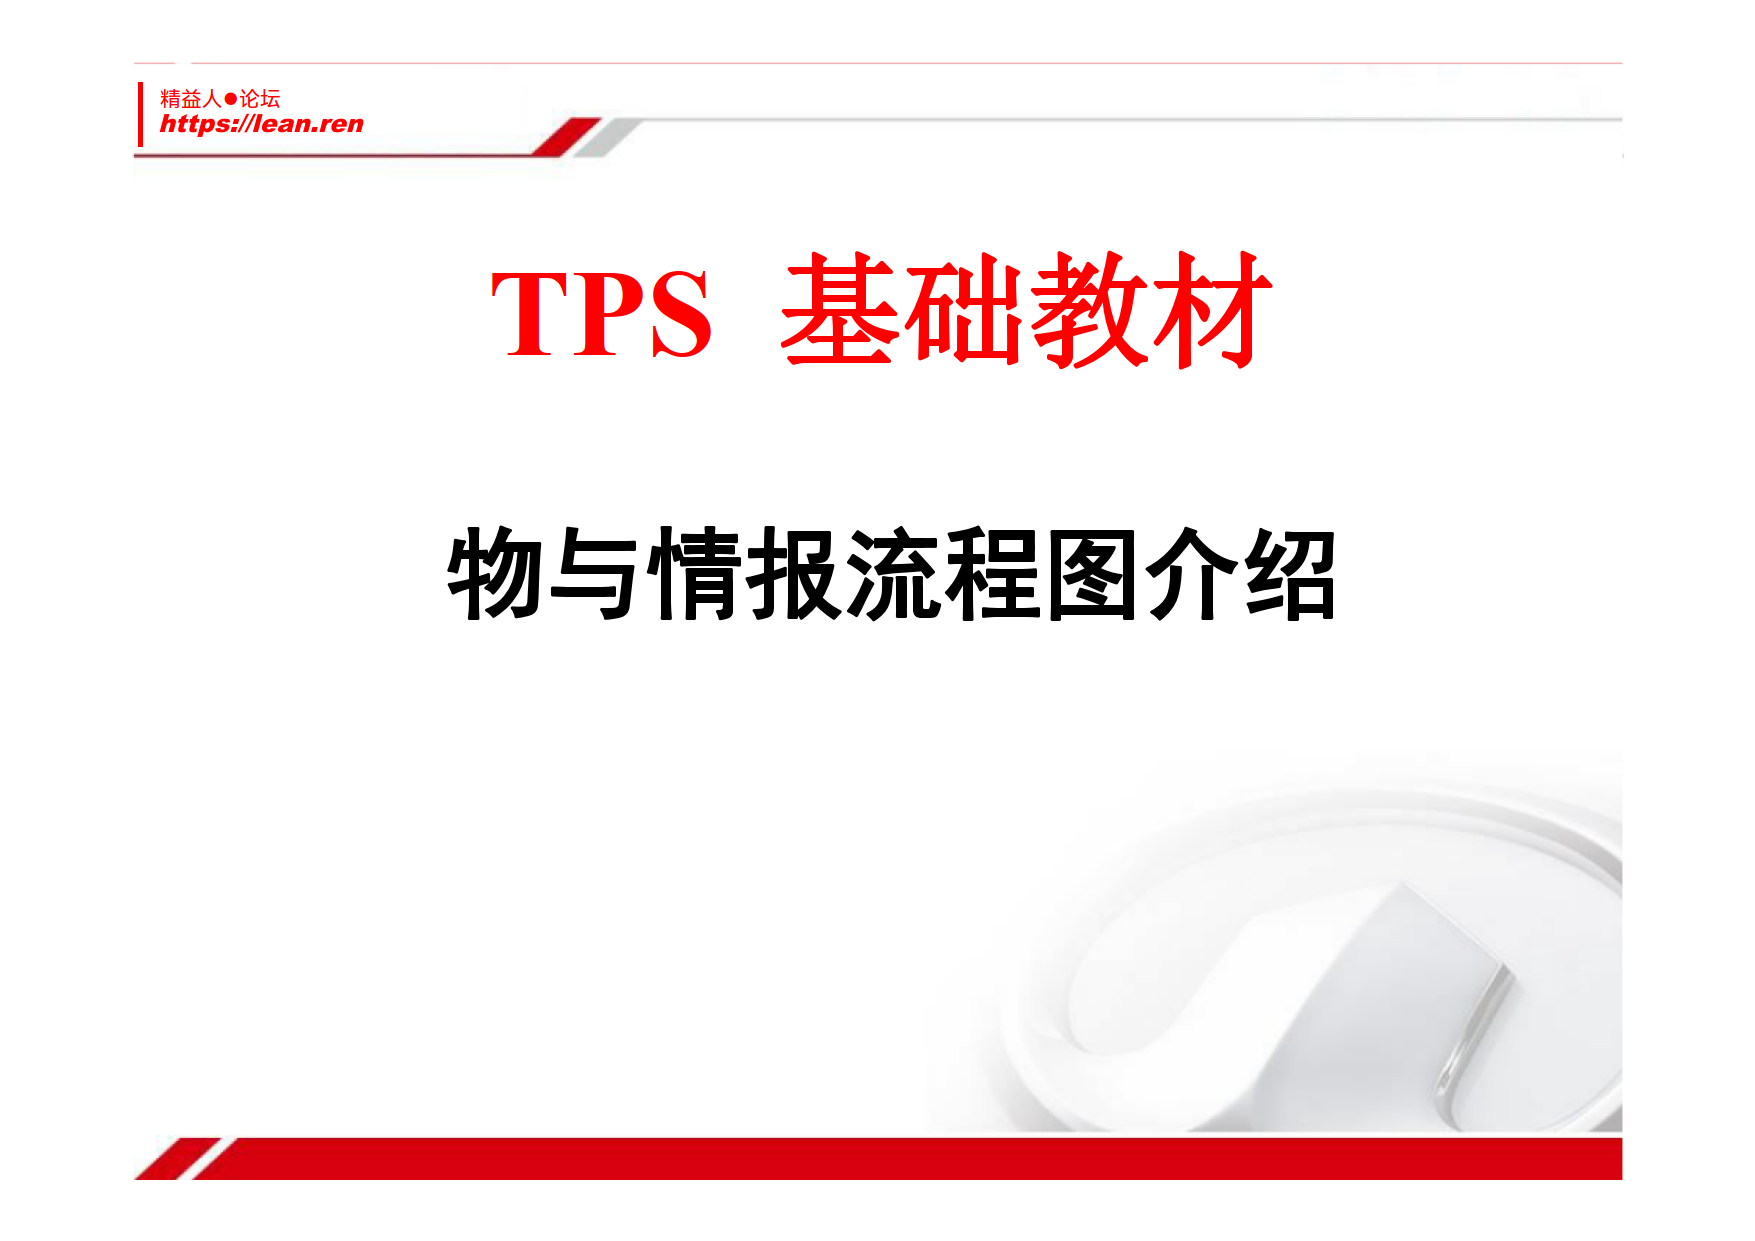 TPS物与情报流程图介绍_1.png